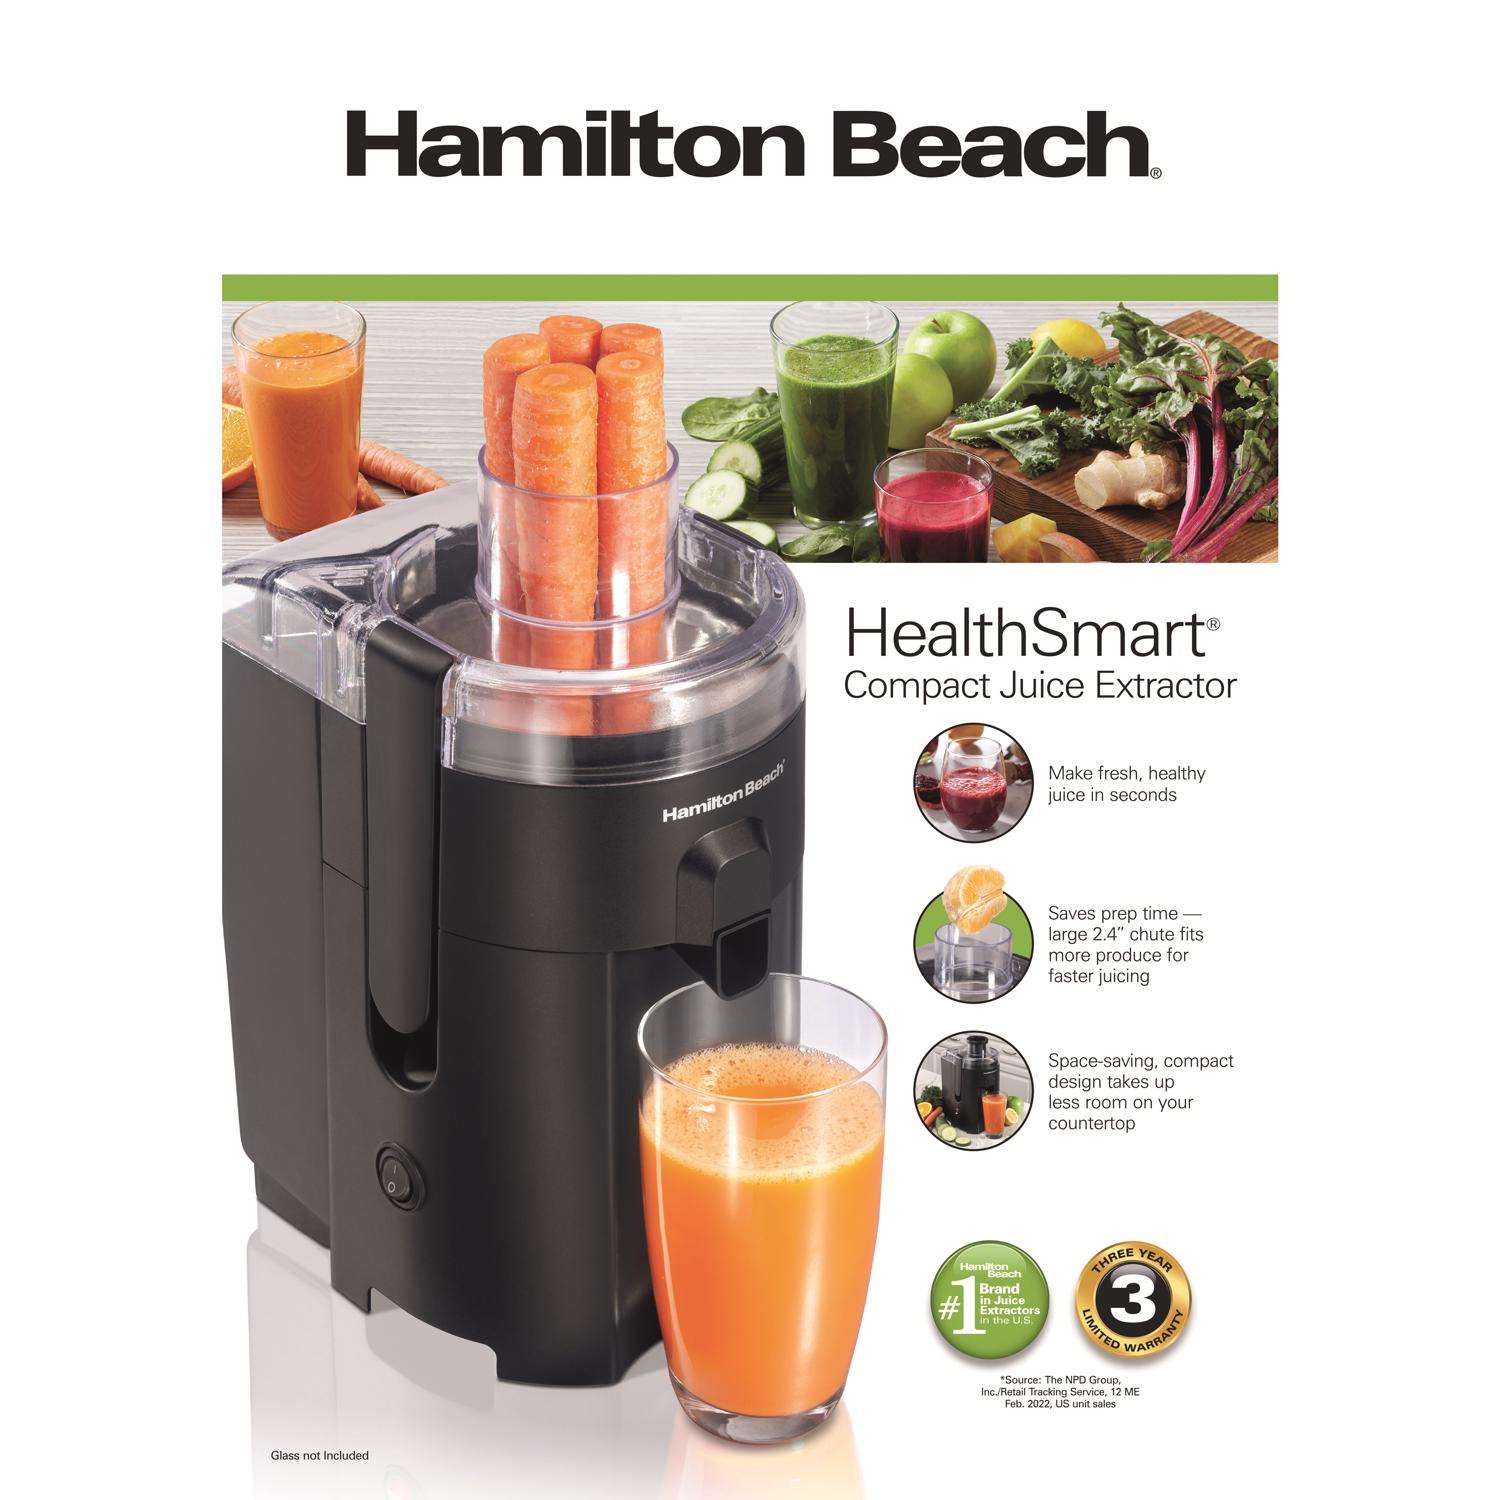 Keeping Juice Longer: My Hamilton Beach Juicer Review